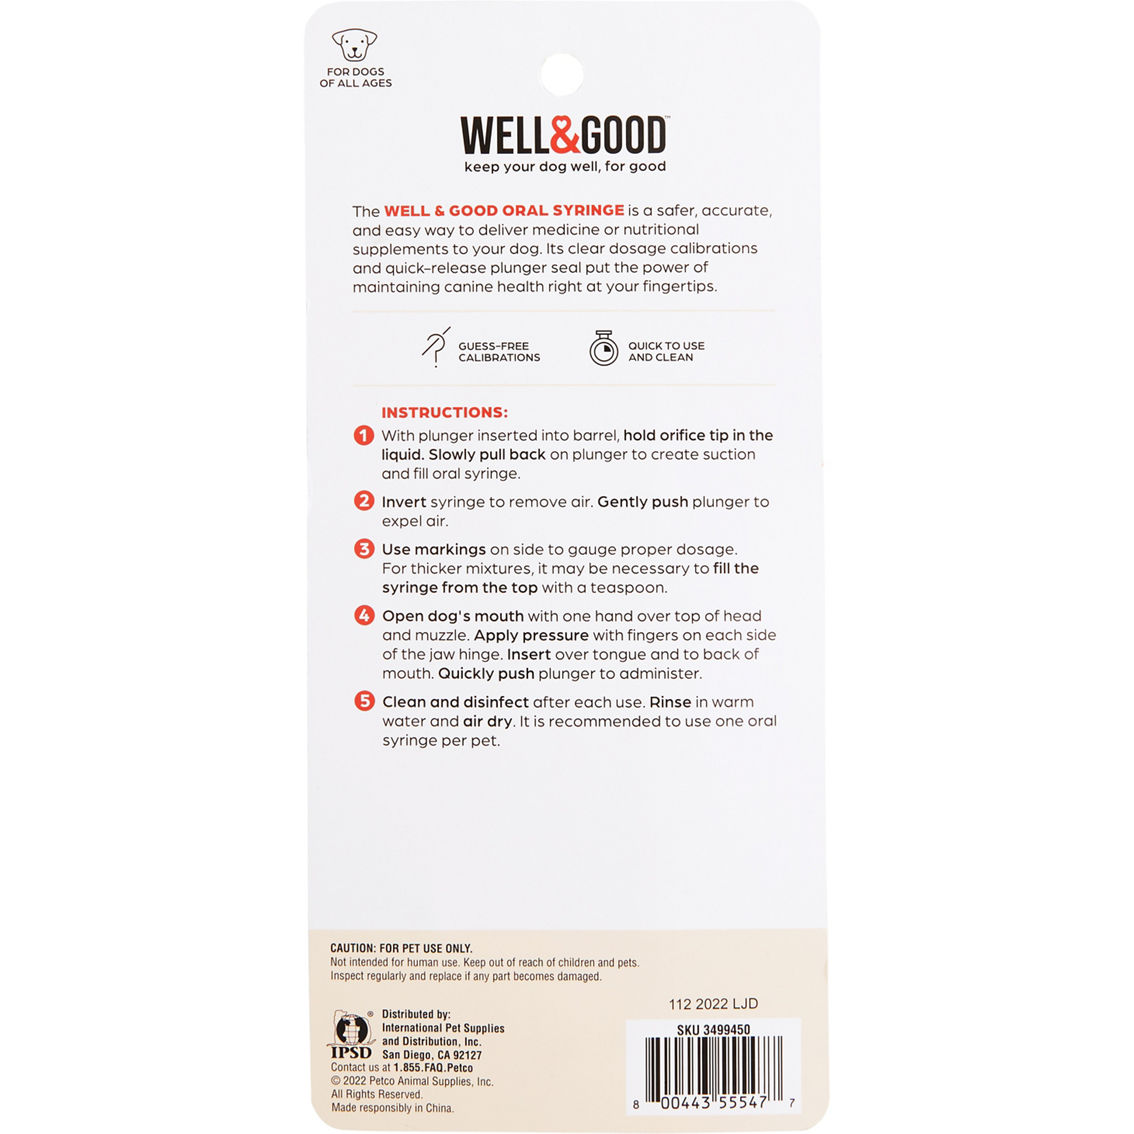 Well & Good Dog Oral Syringe - Image 2 of 2